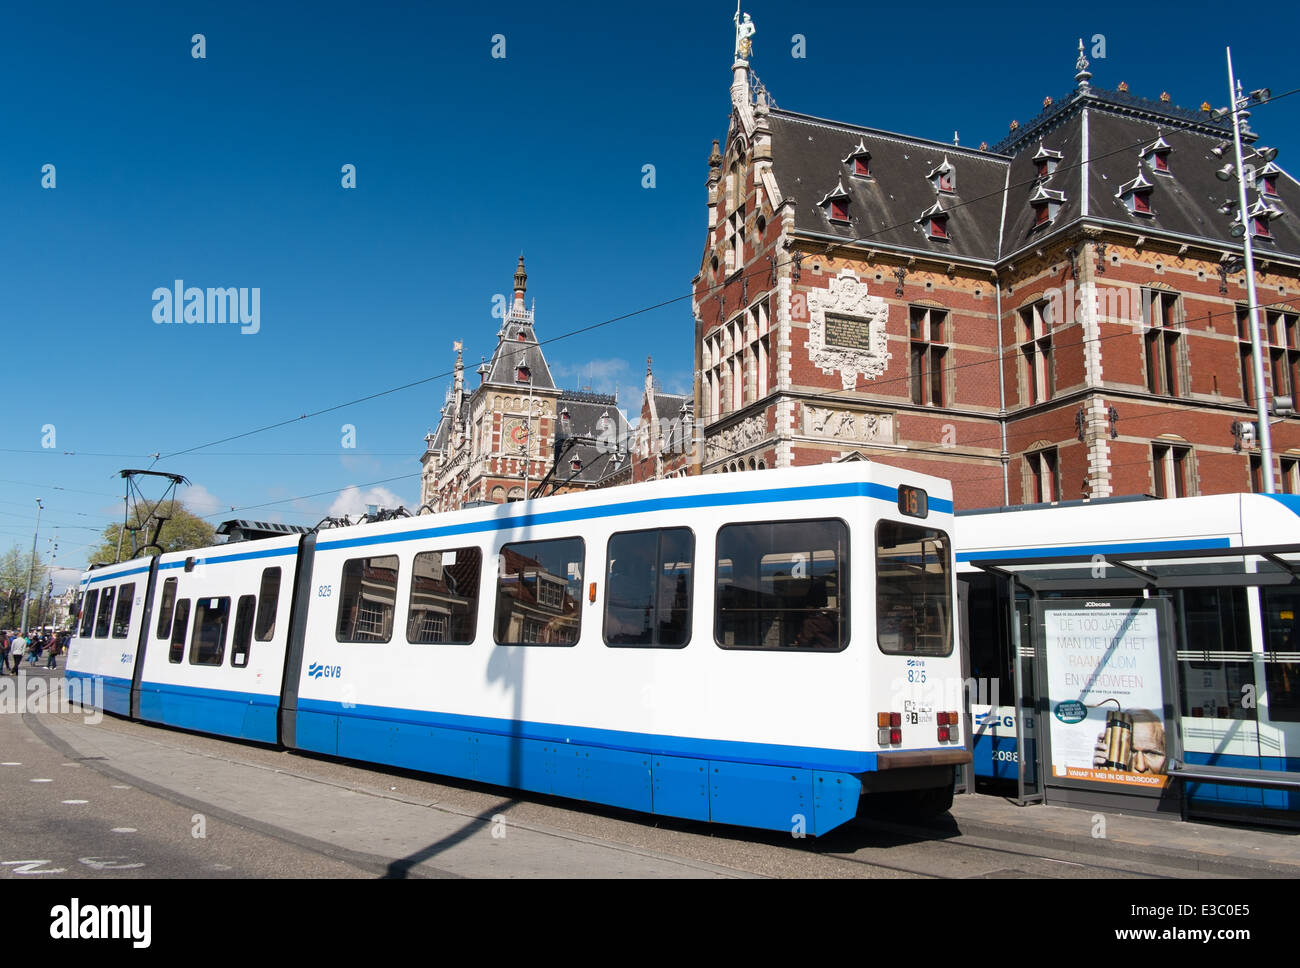 Tram outside Central station, Amsterdam, Netherlands. Stock Photo